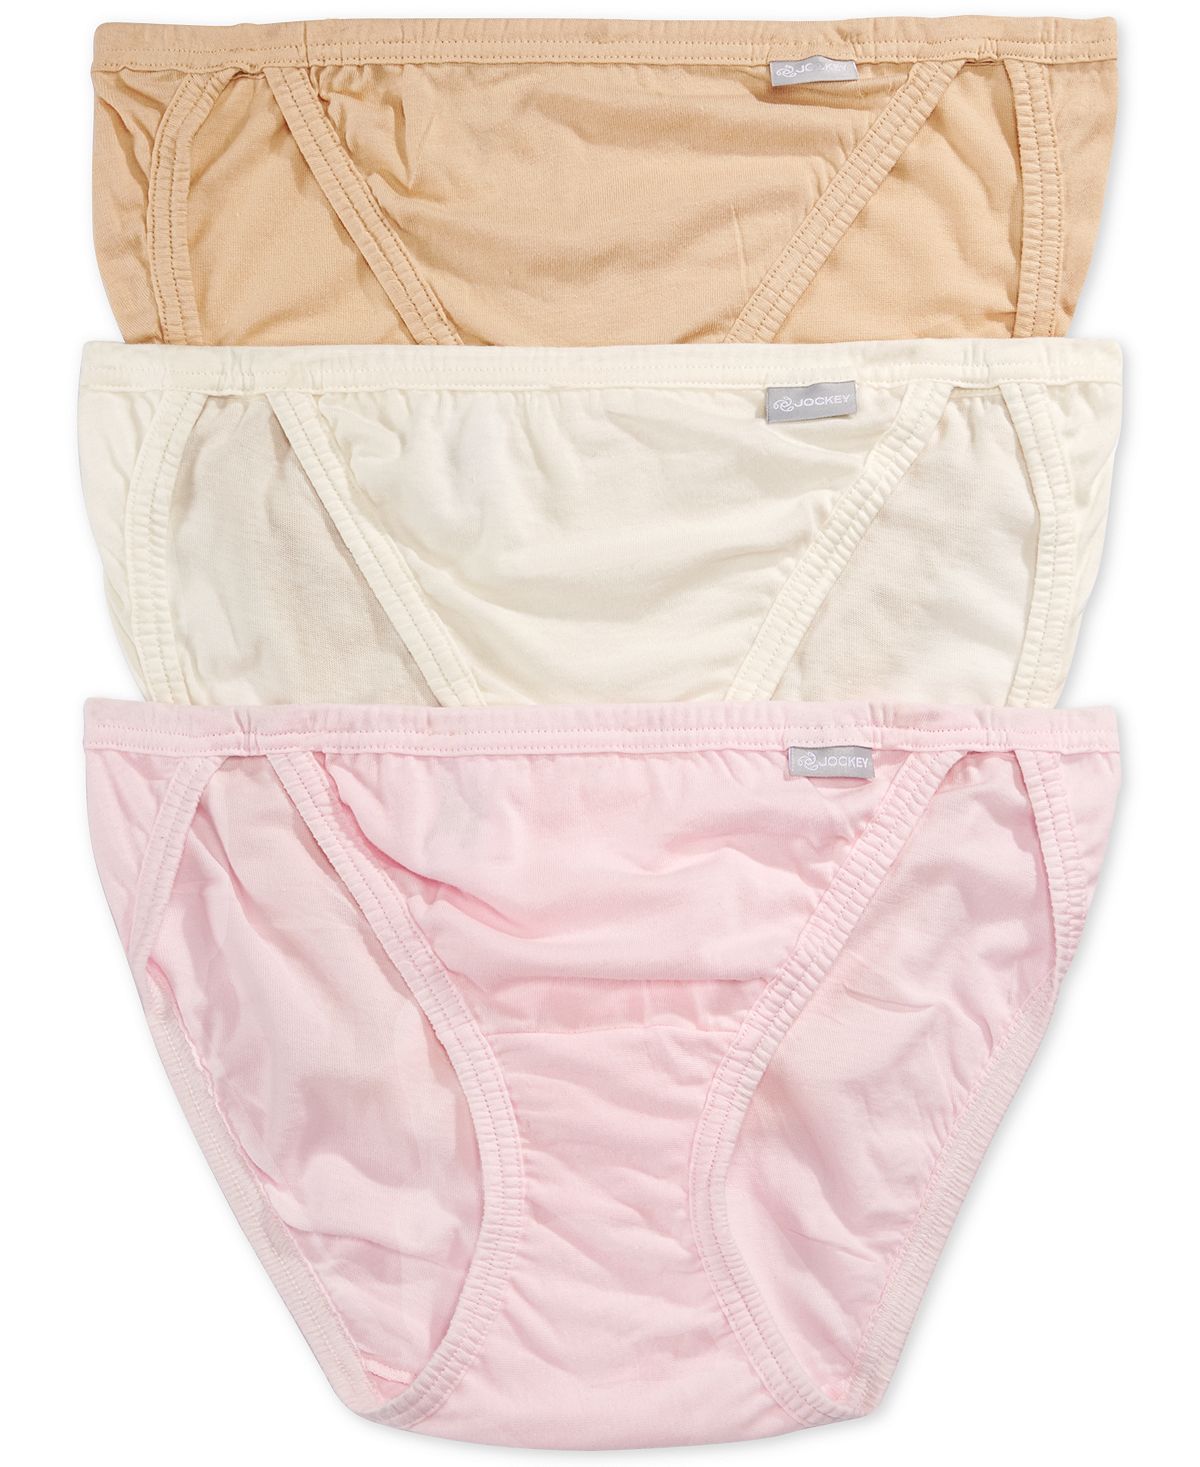 Jockey Elance String Bikini Underwear 3 Pack 1483 Ivory/Sand/Pink Pearl